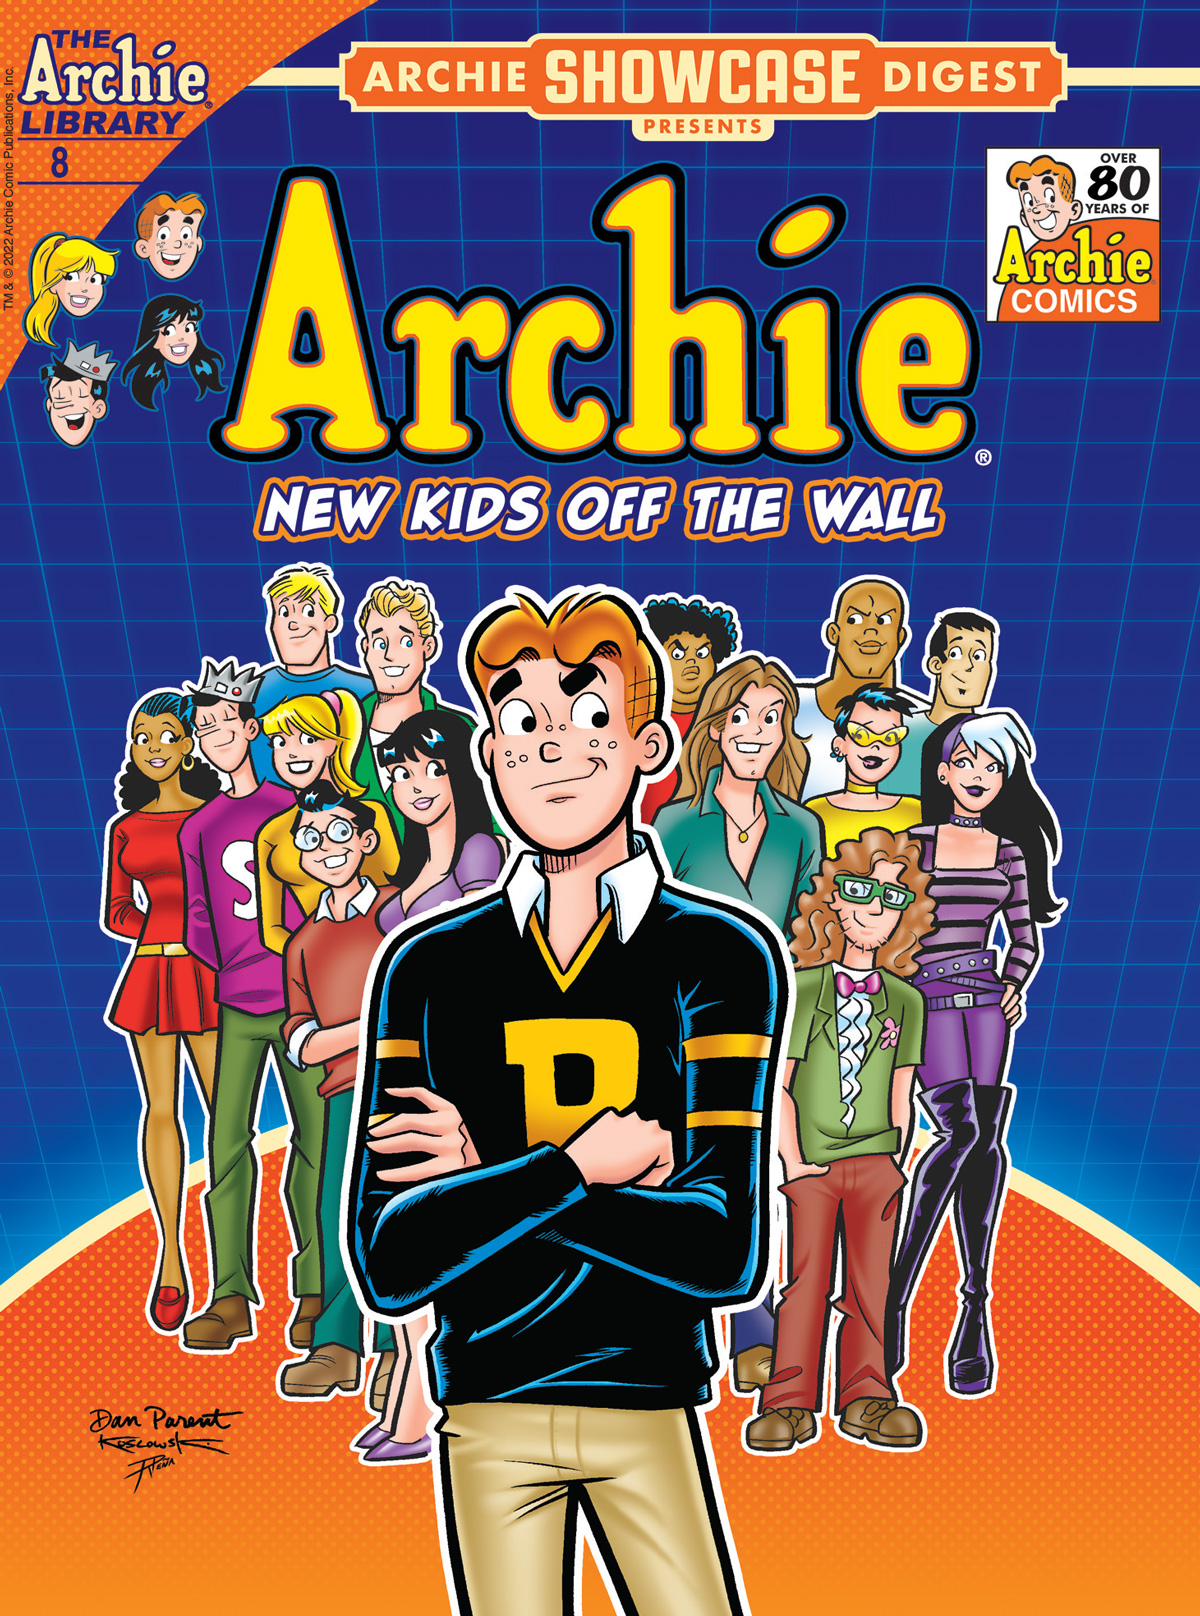 Archies comic